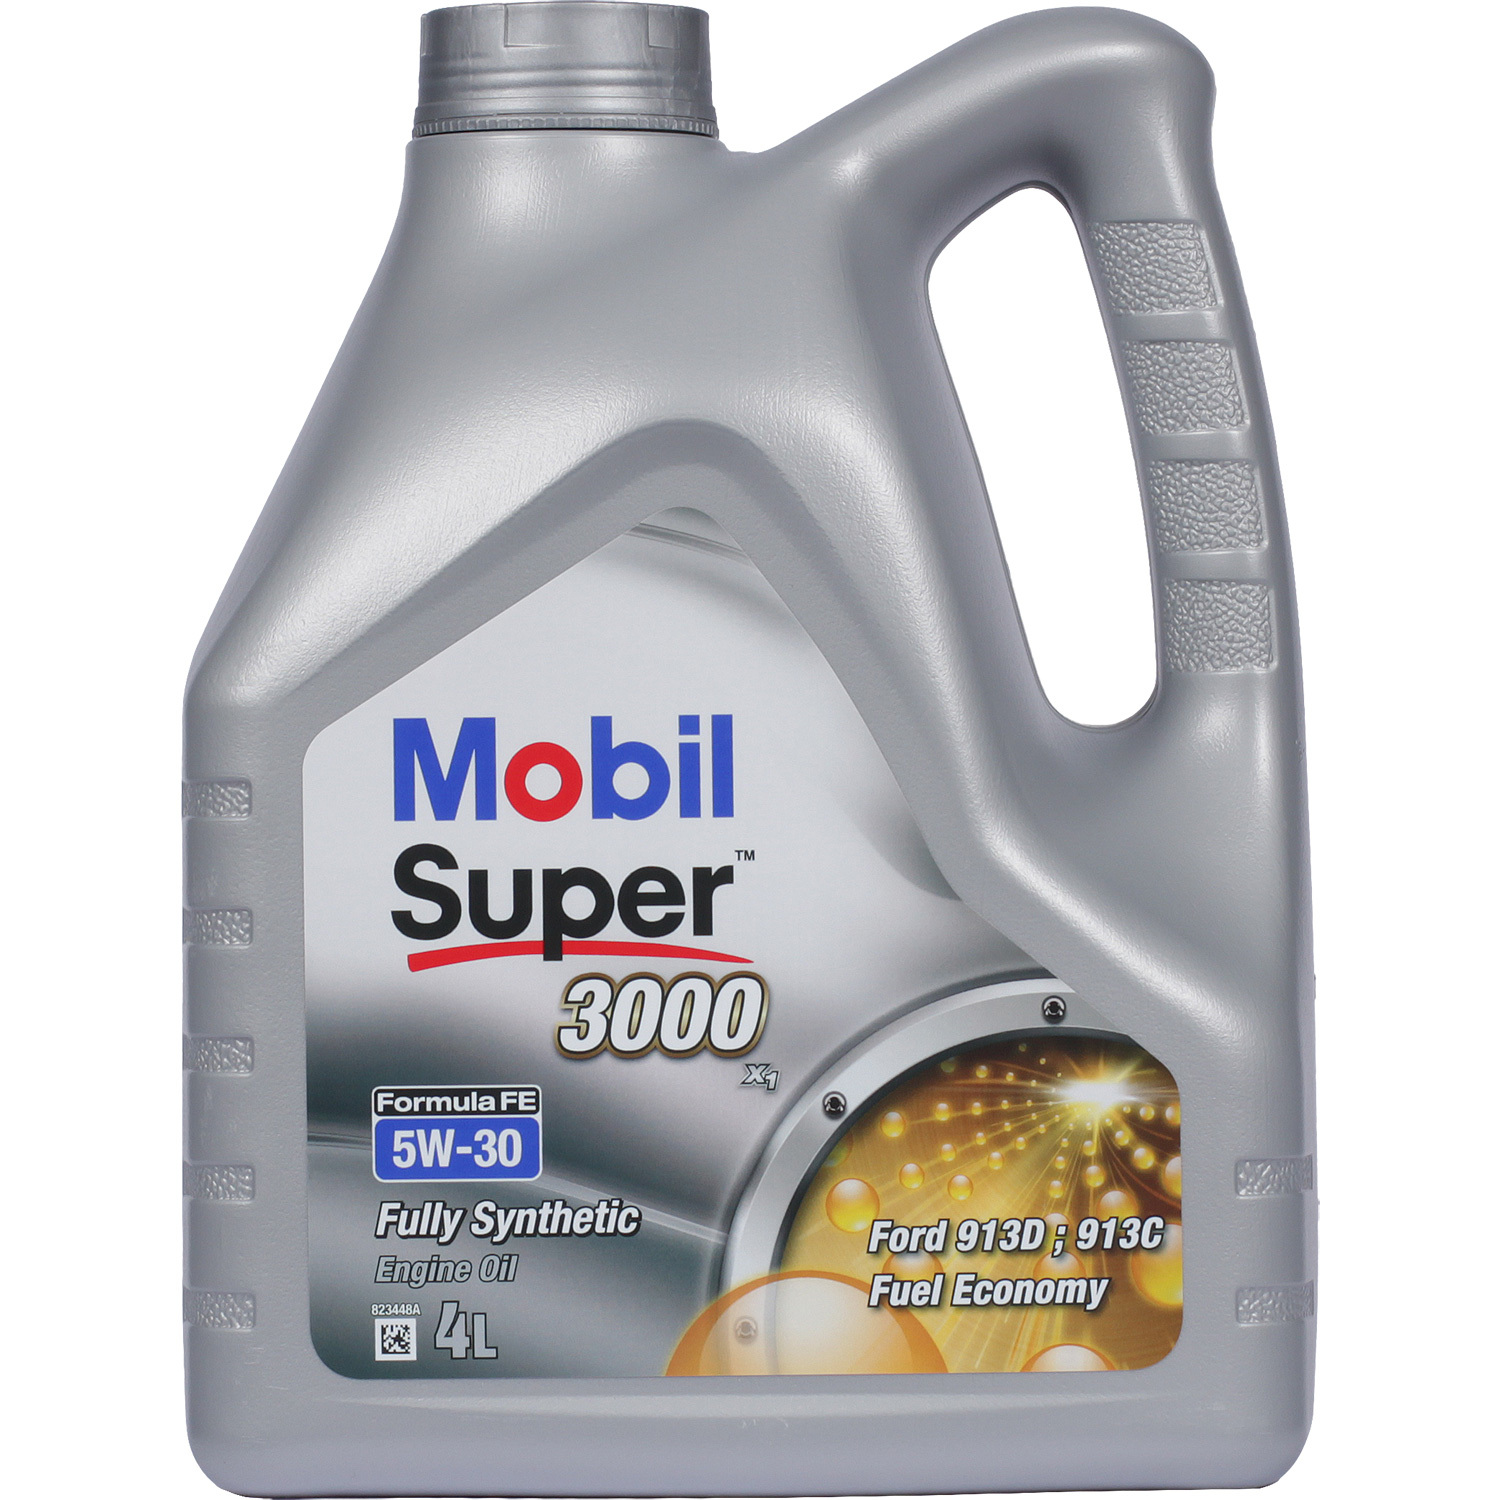 Mobil Моторное масло Mobil Super 3000 X1 Formula FE 5W-30, 4 л масло моторное mobil super 3000 x1 5w 40 1л